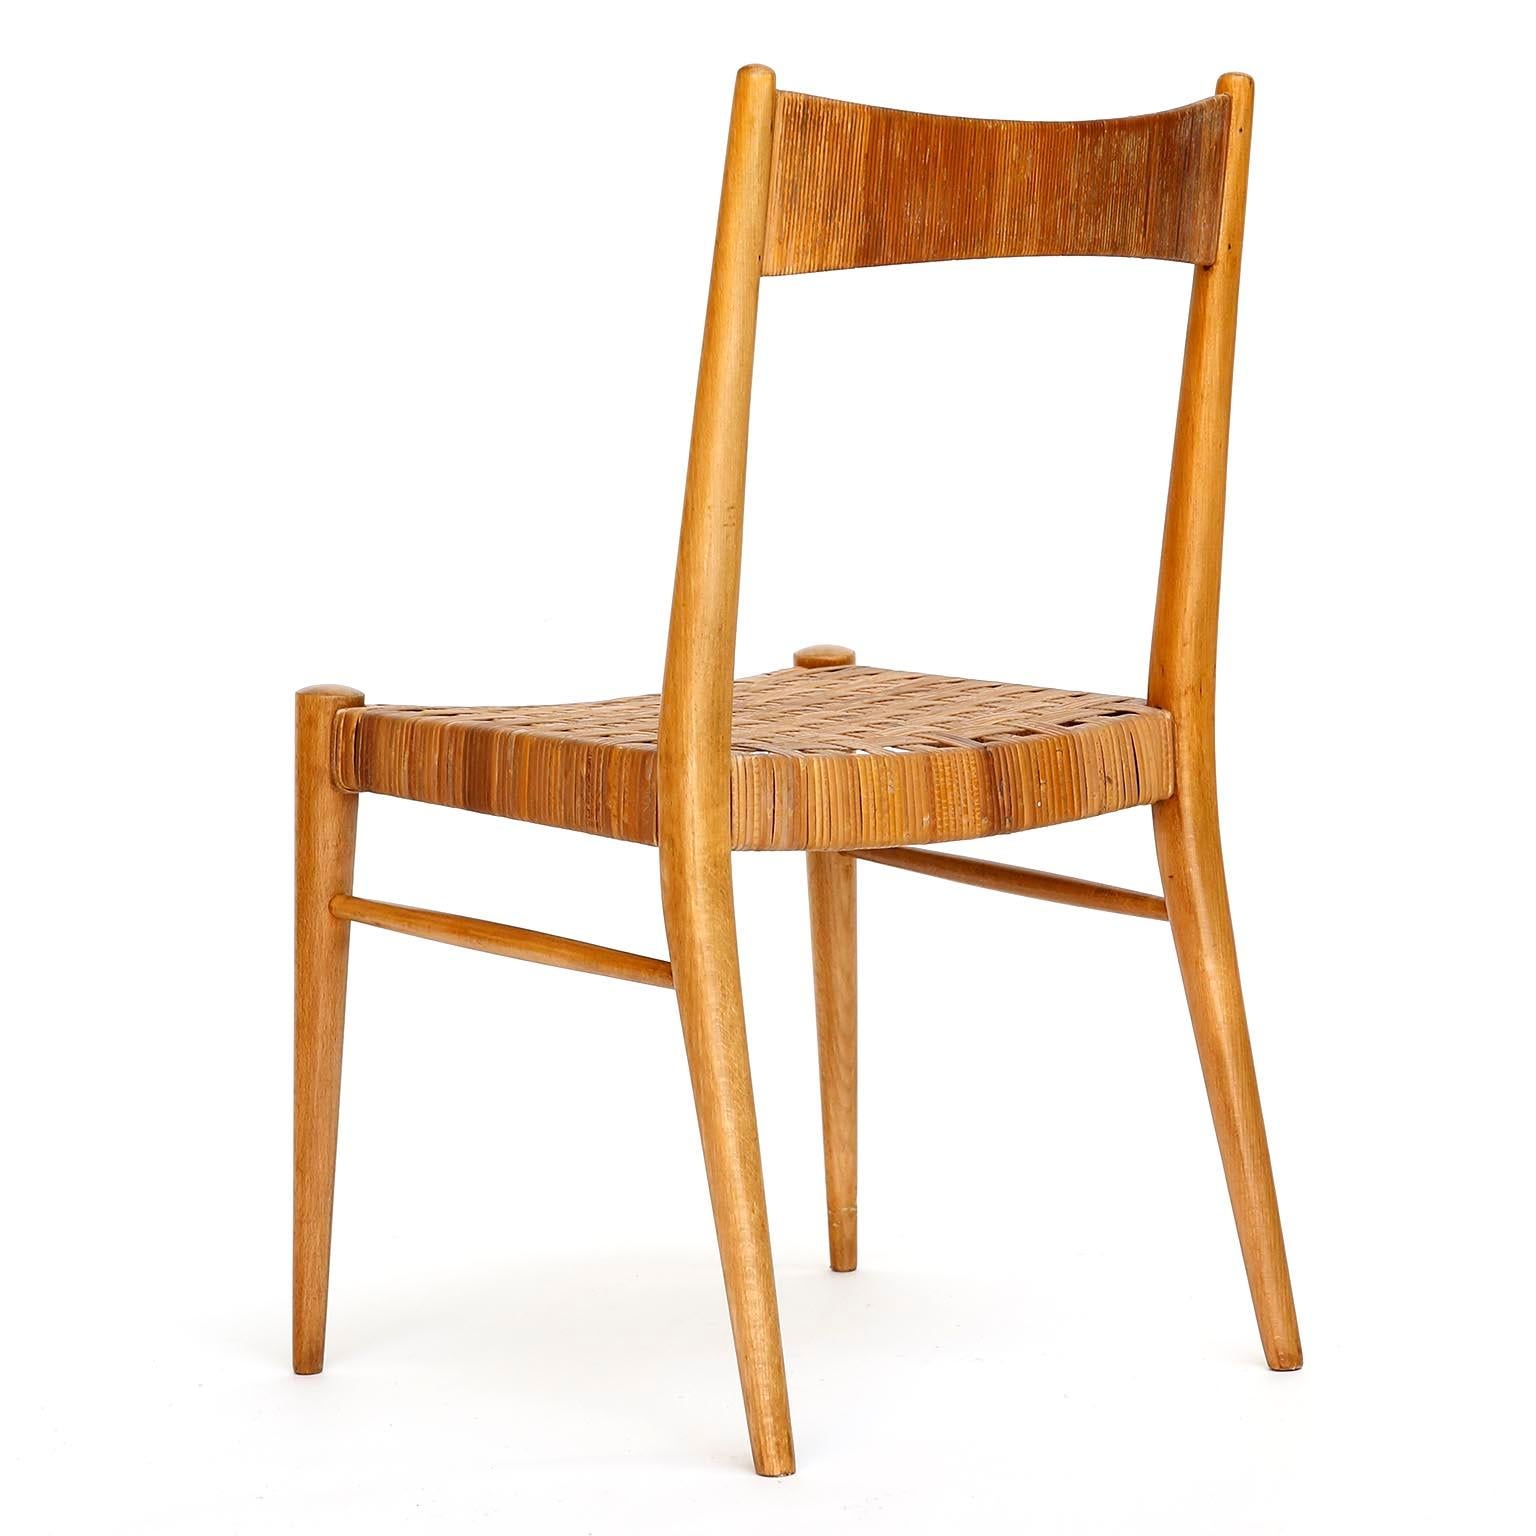 Four Anna-Lülja Praun Chairs, Wood Wicker Cane, 1950s For Sale 5